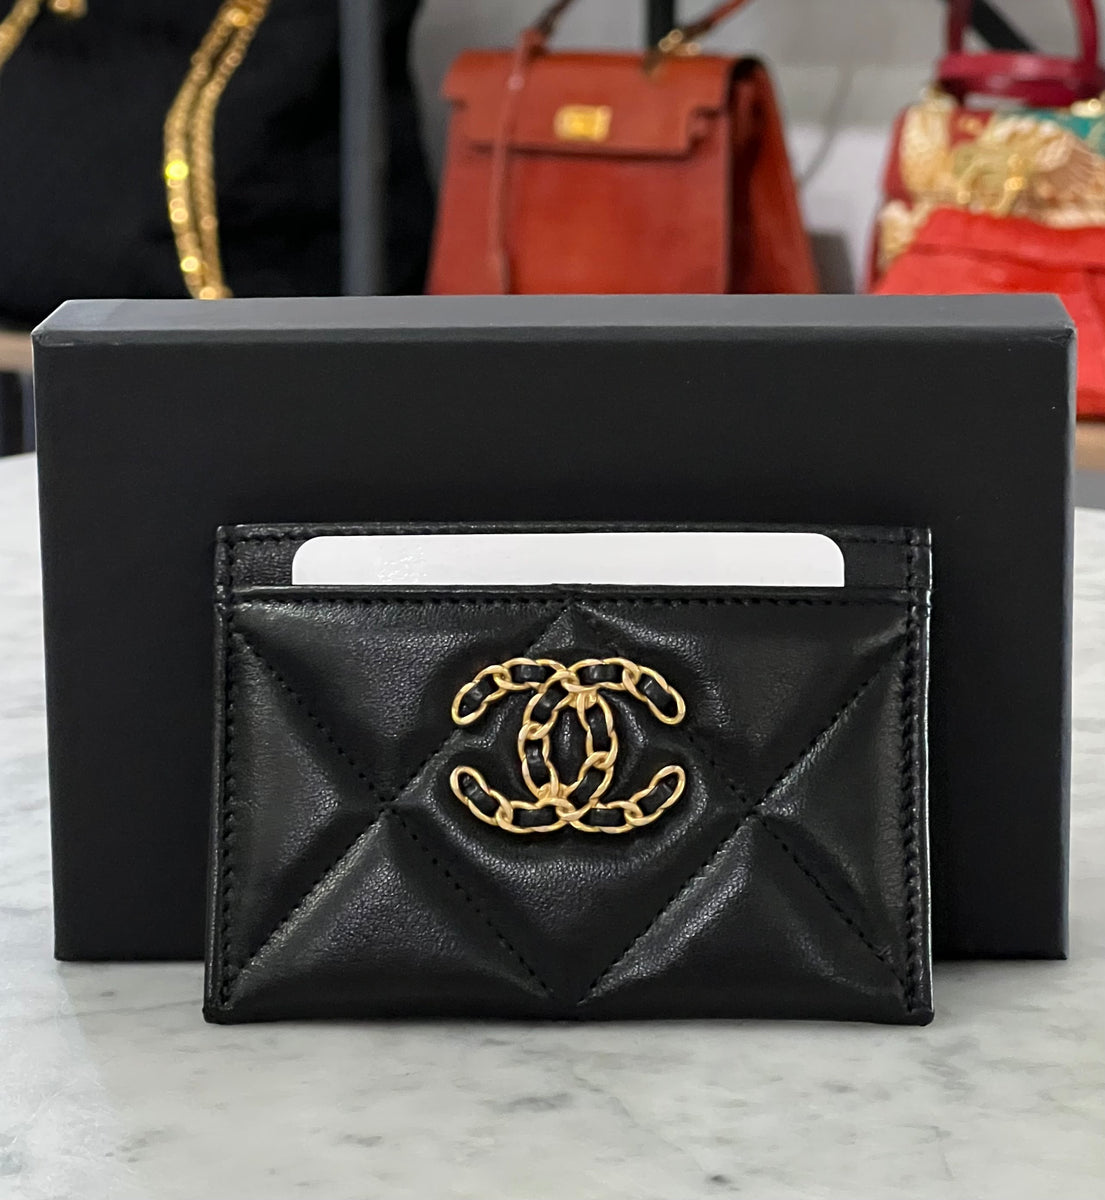 Chanel classic card holder - Gem